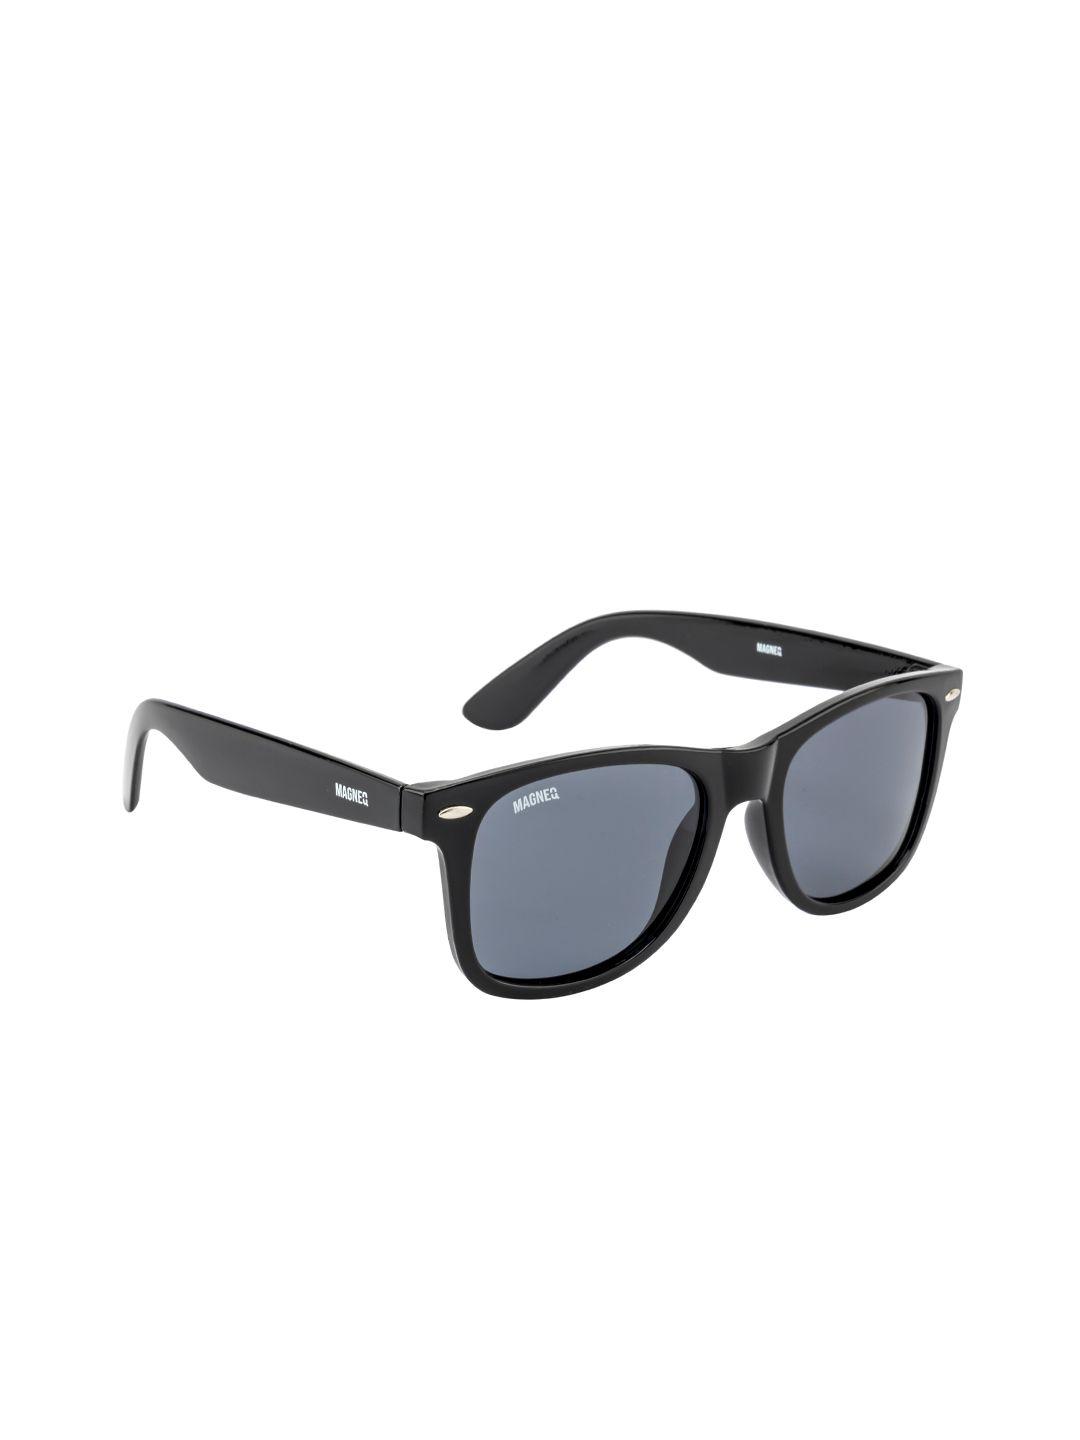 magneq lens & wayfarer sunglasses with polarised & uv protected lens mg 8305/s c1 5618